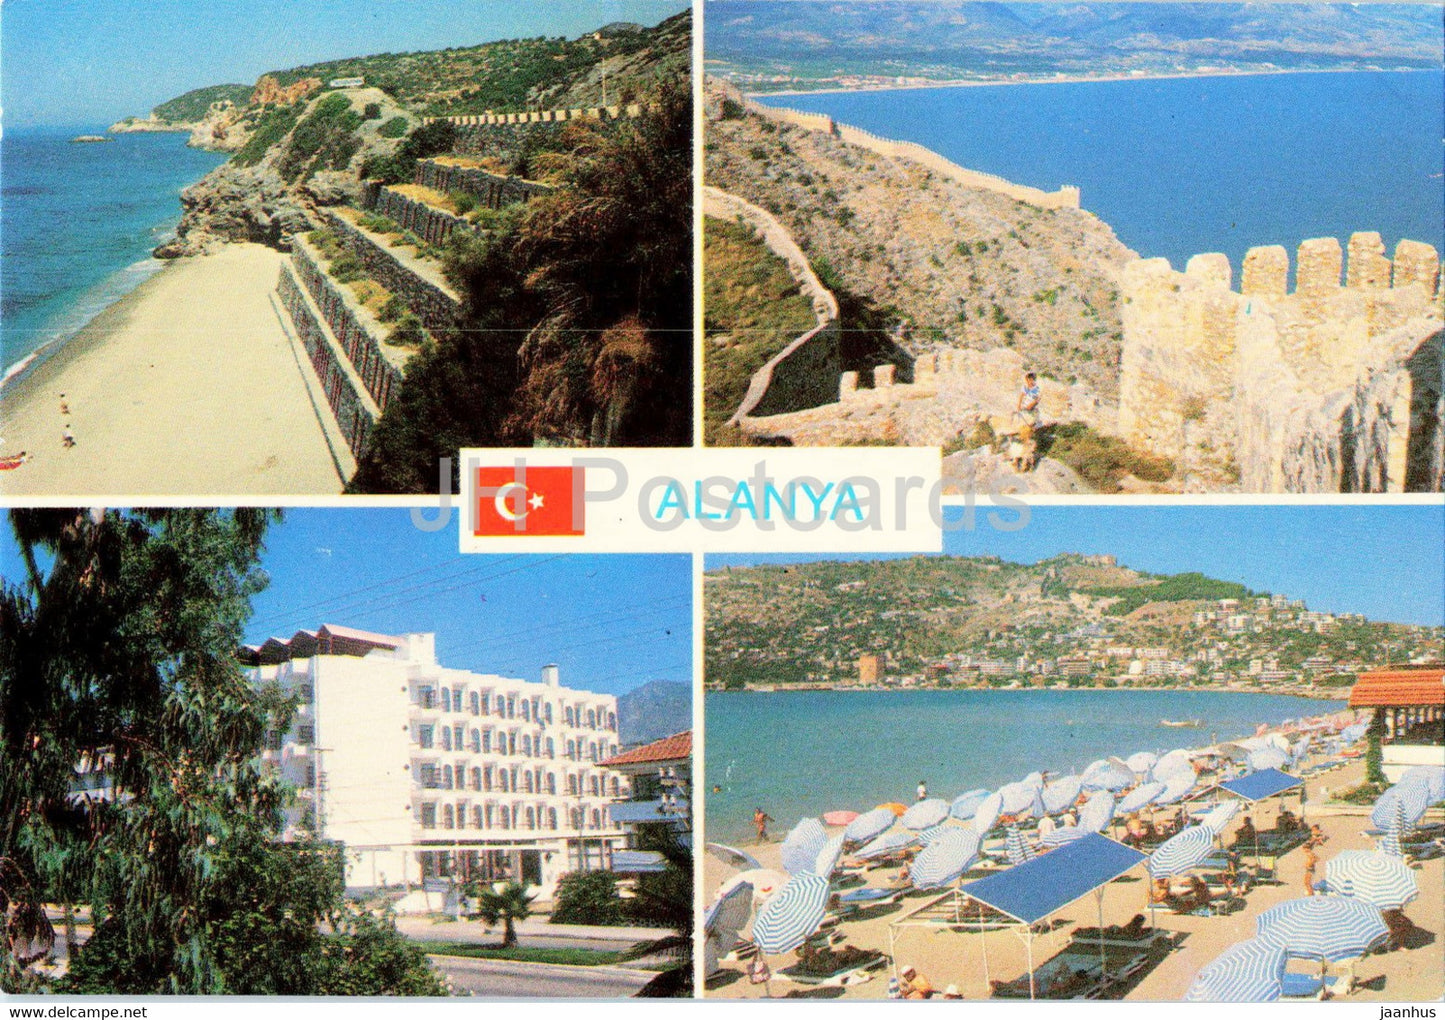 Alanya - town views - hotel - 18 - Yetkin Color - Turkey - unused - JH Postcards